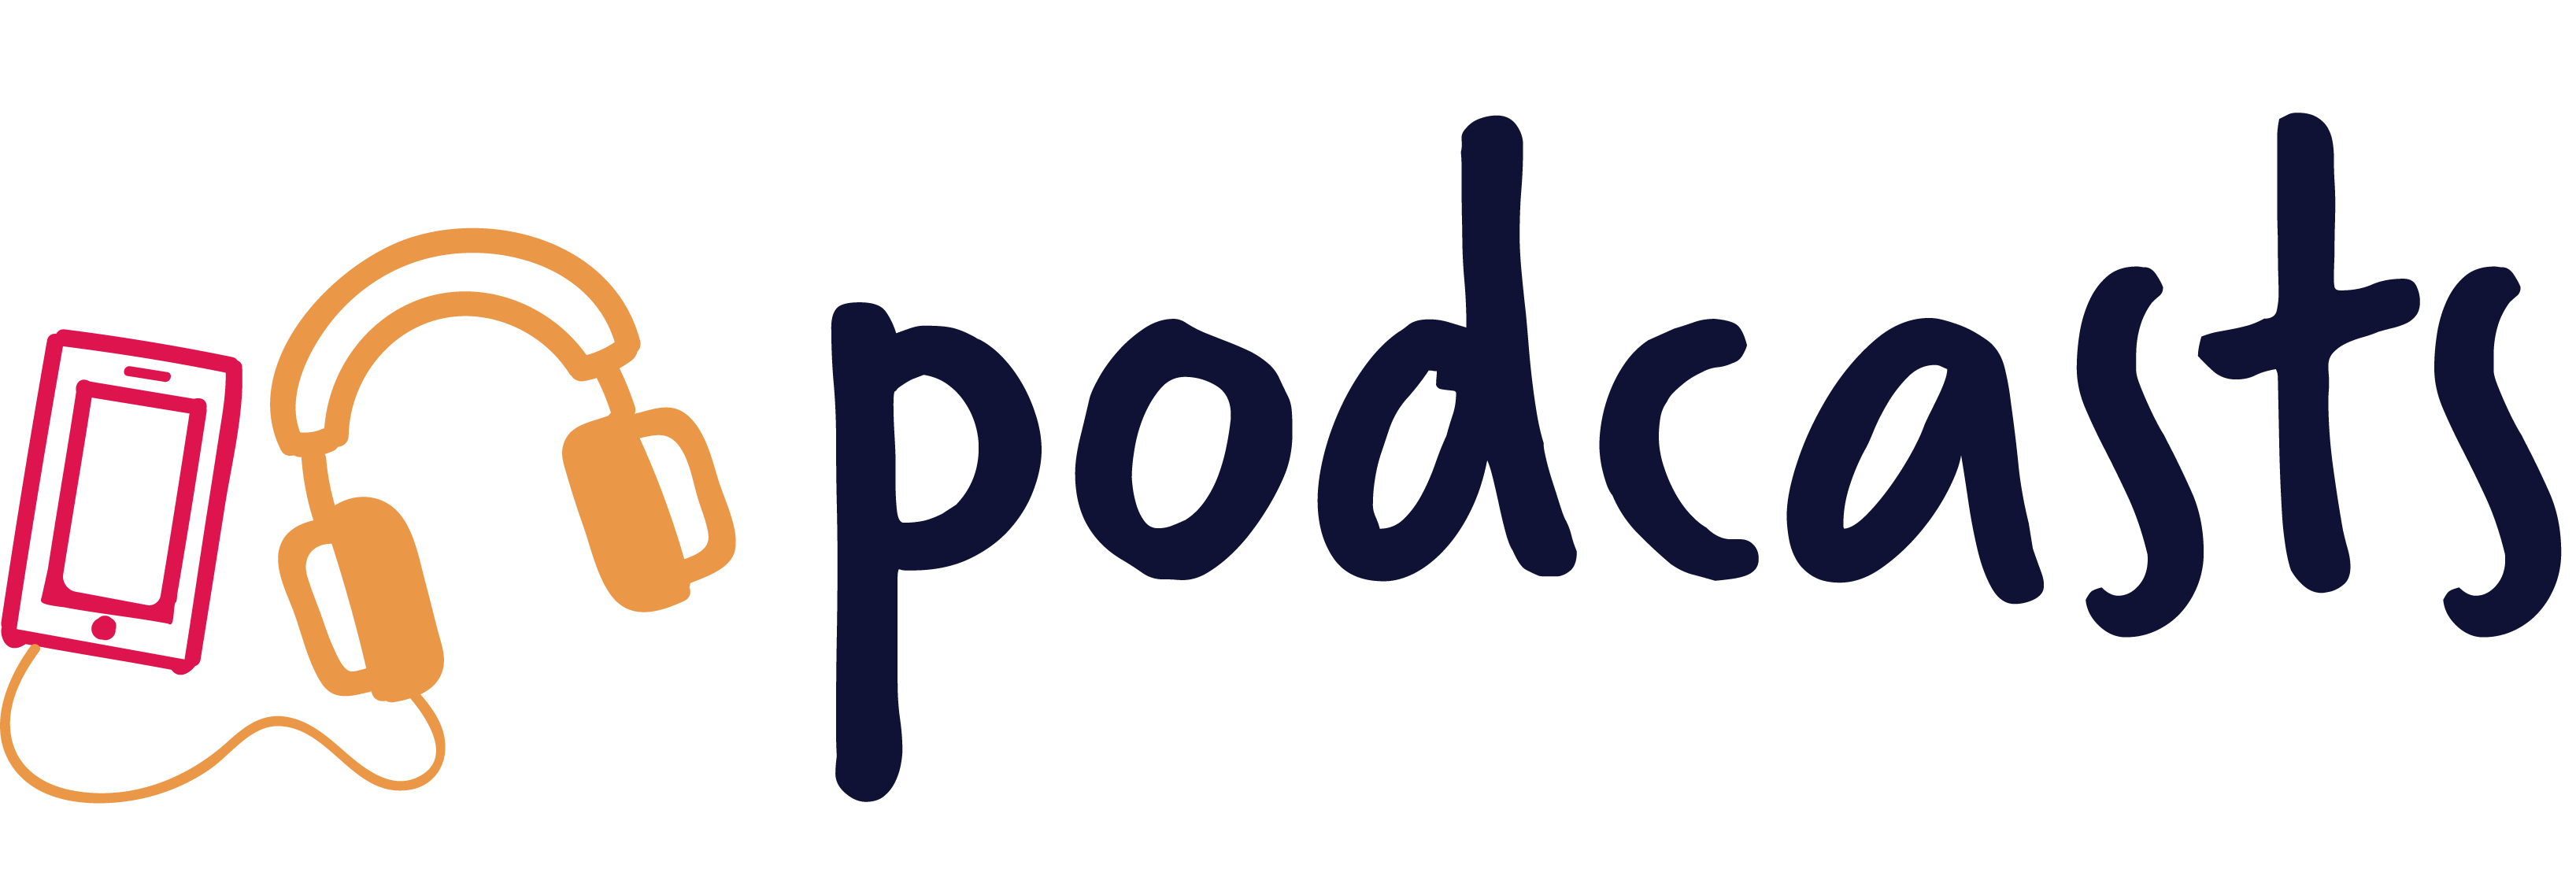 Podcast Logo - Podcast